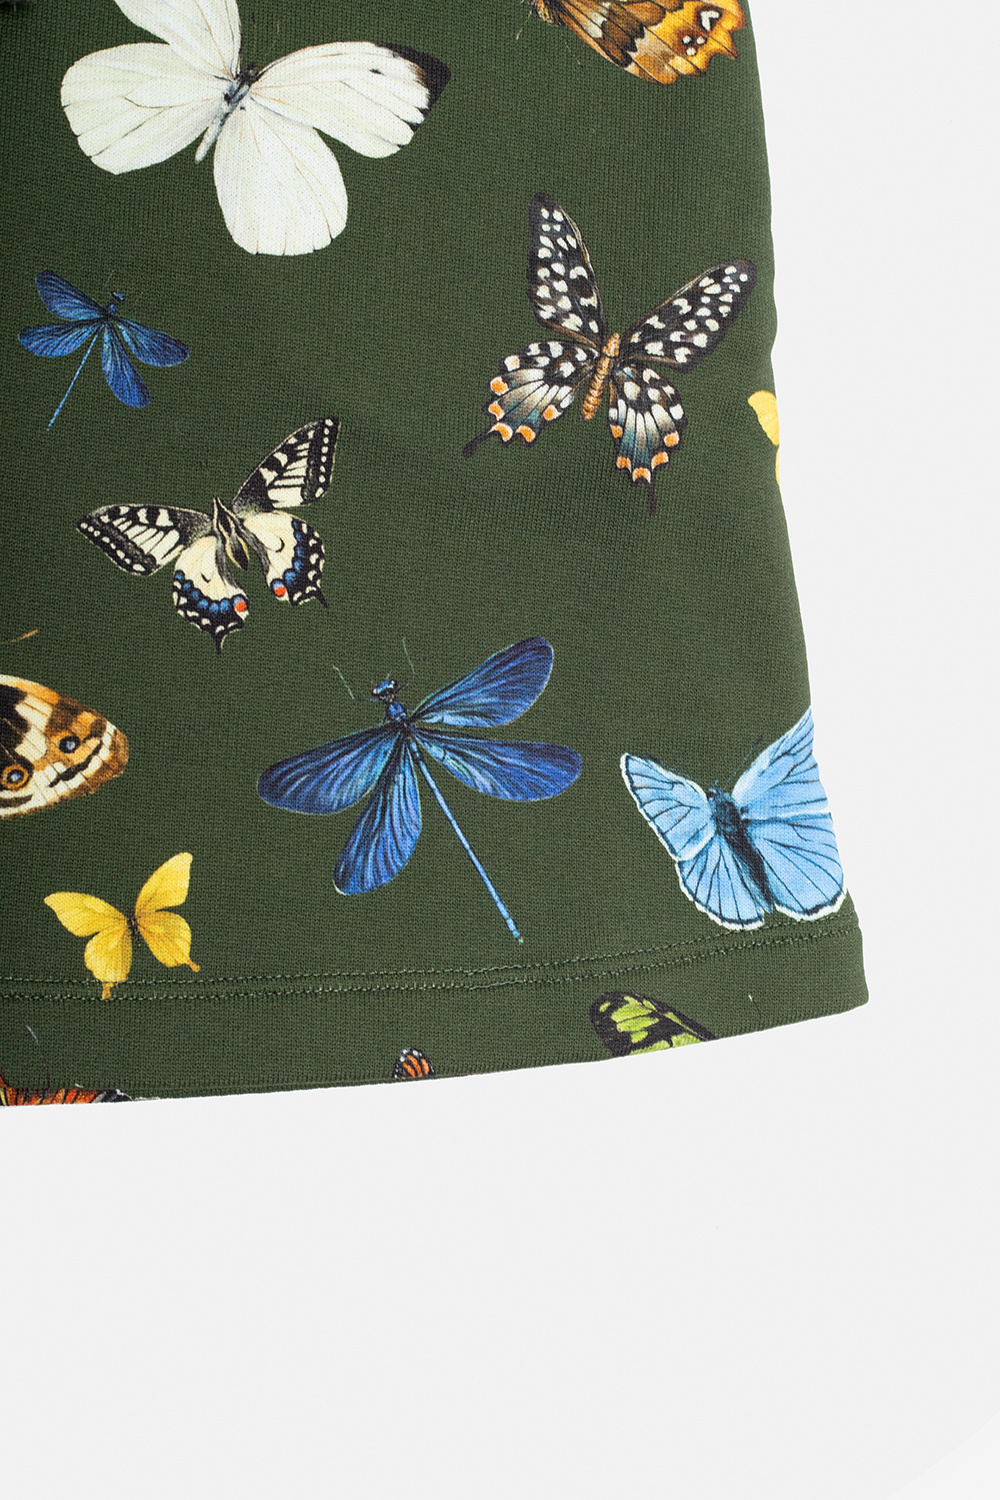 Dolce Vita s Spring 2016 Shoe Line Inspiration Dolce & Gabbana tweed buttoned jacket